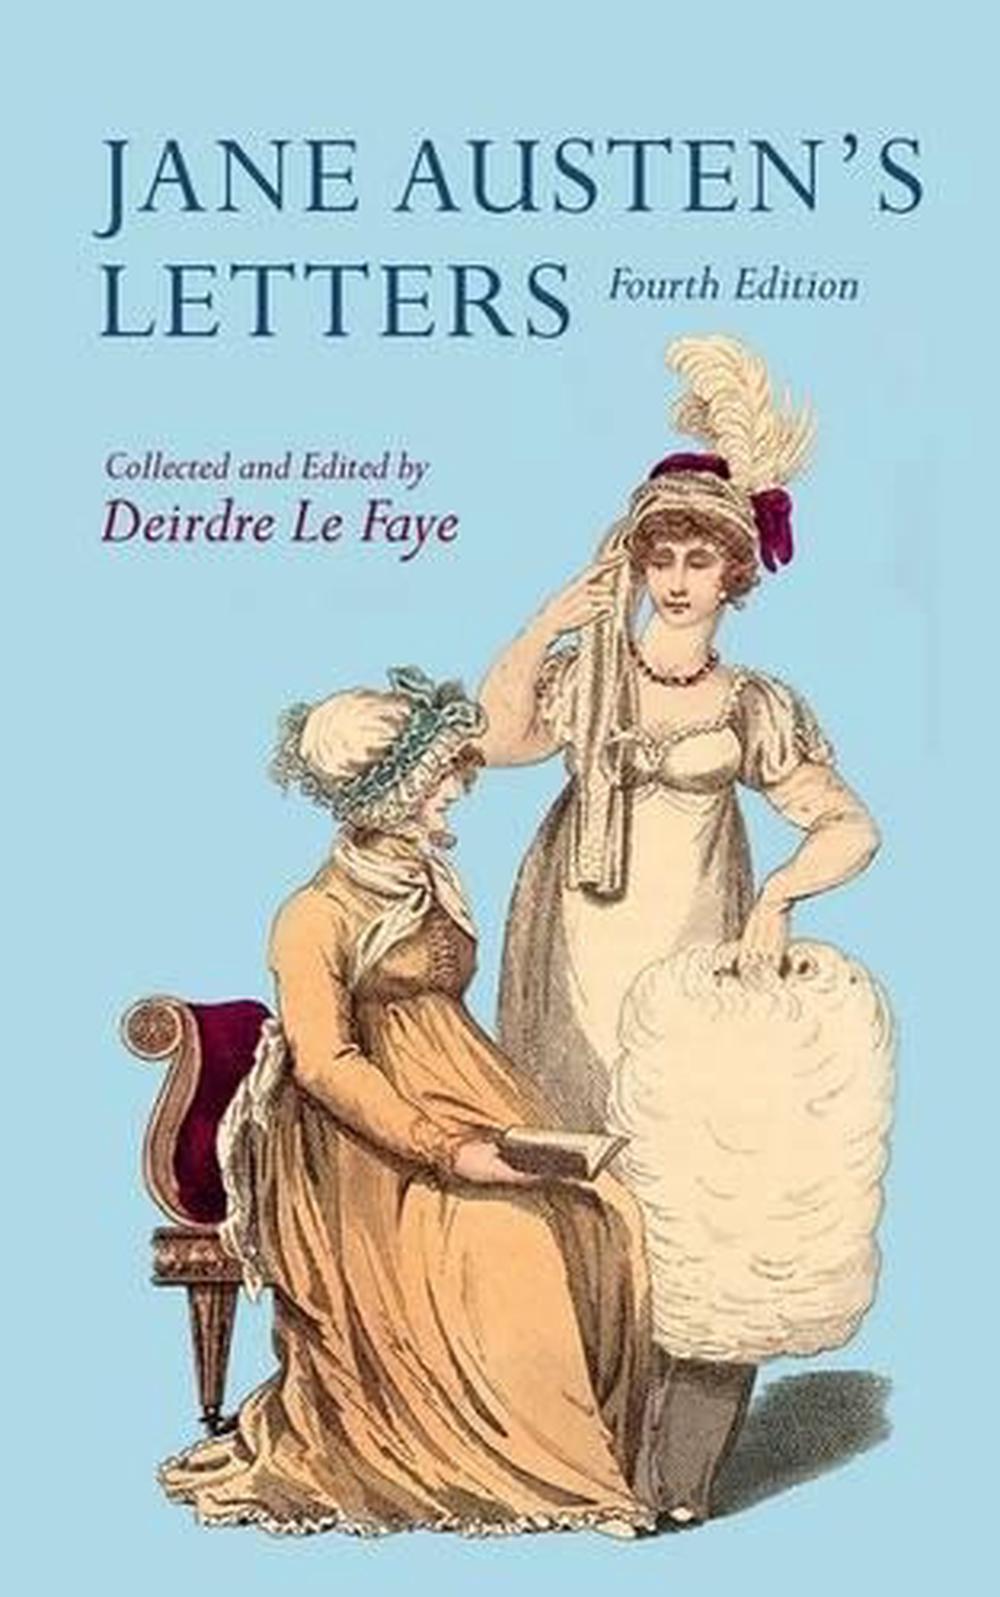 Jane Austen's Letters (Fourth Edition) - Austen, Jane and Le Faye, Deirdre